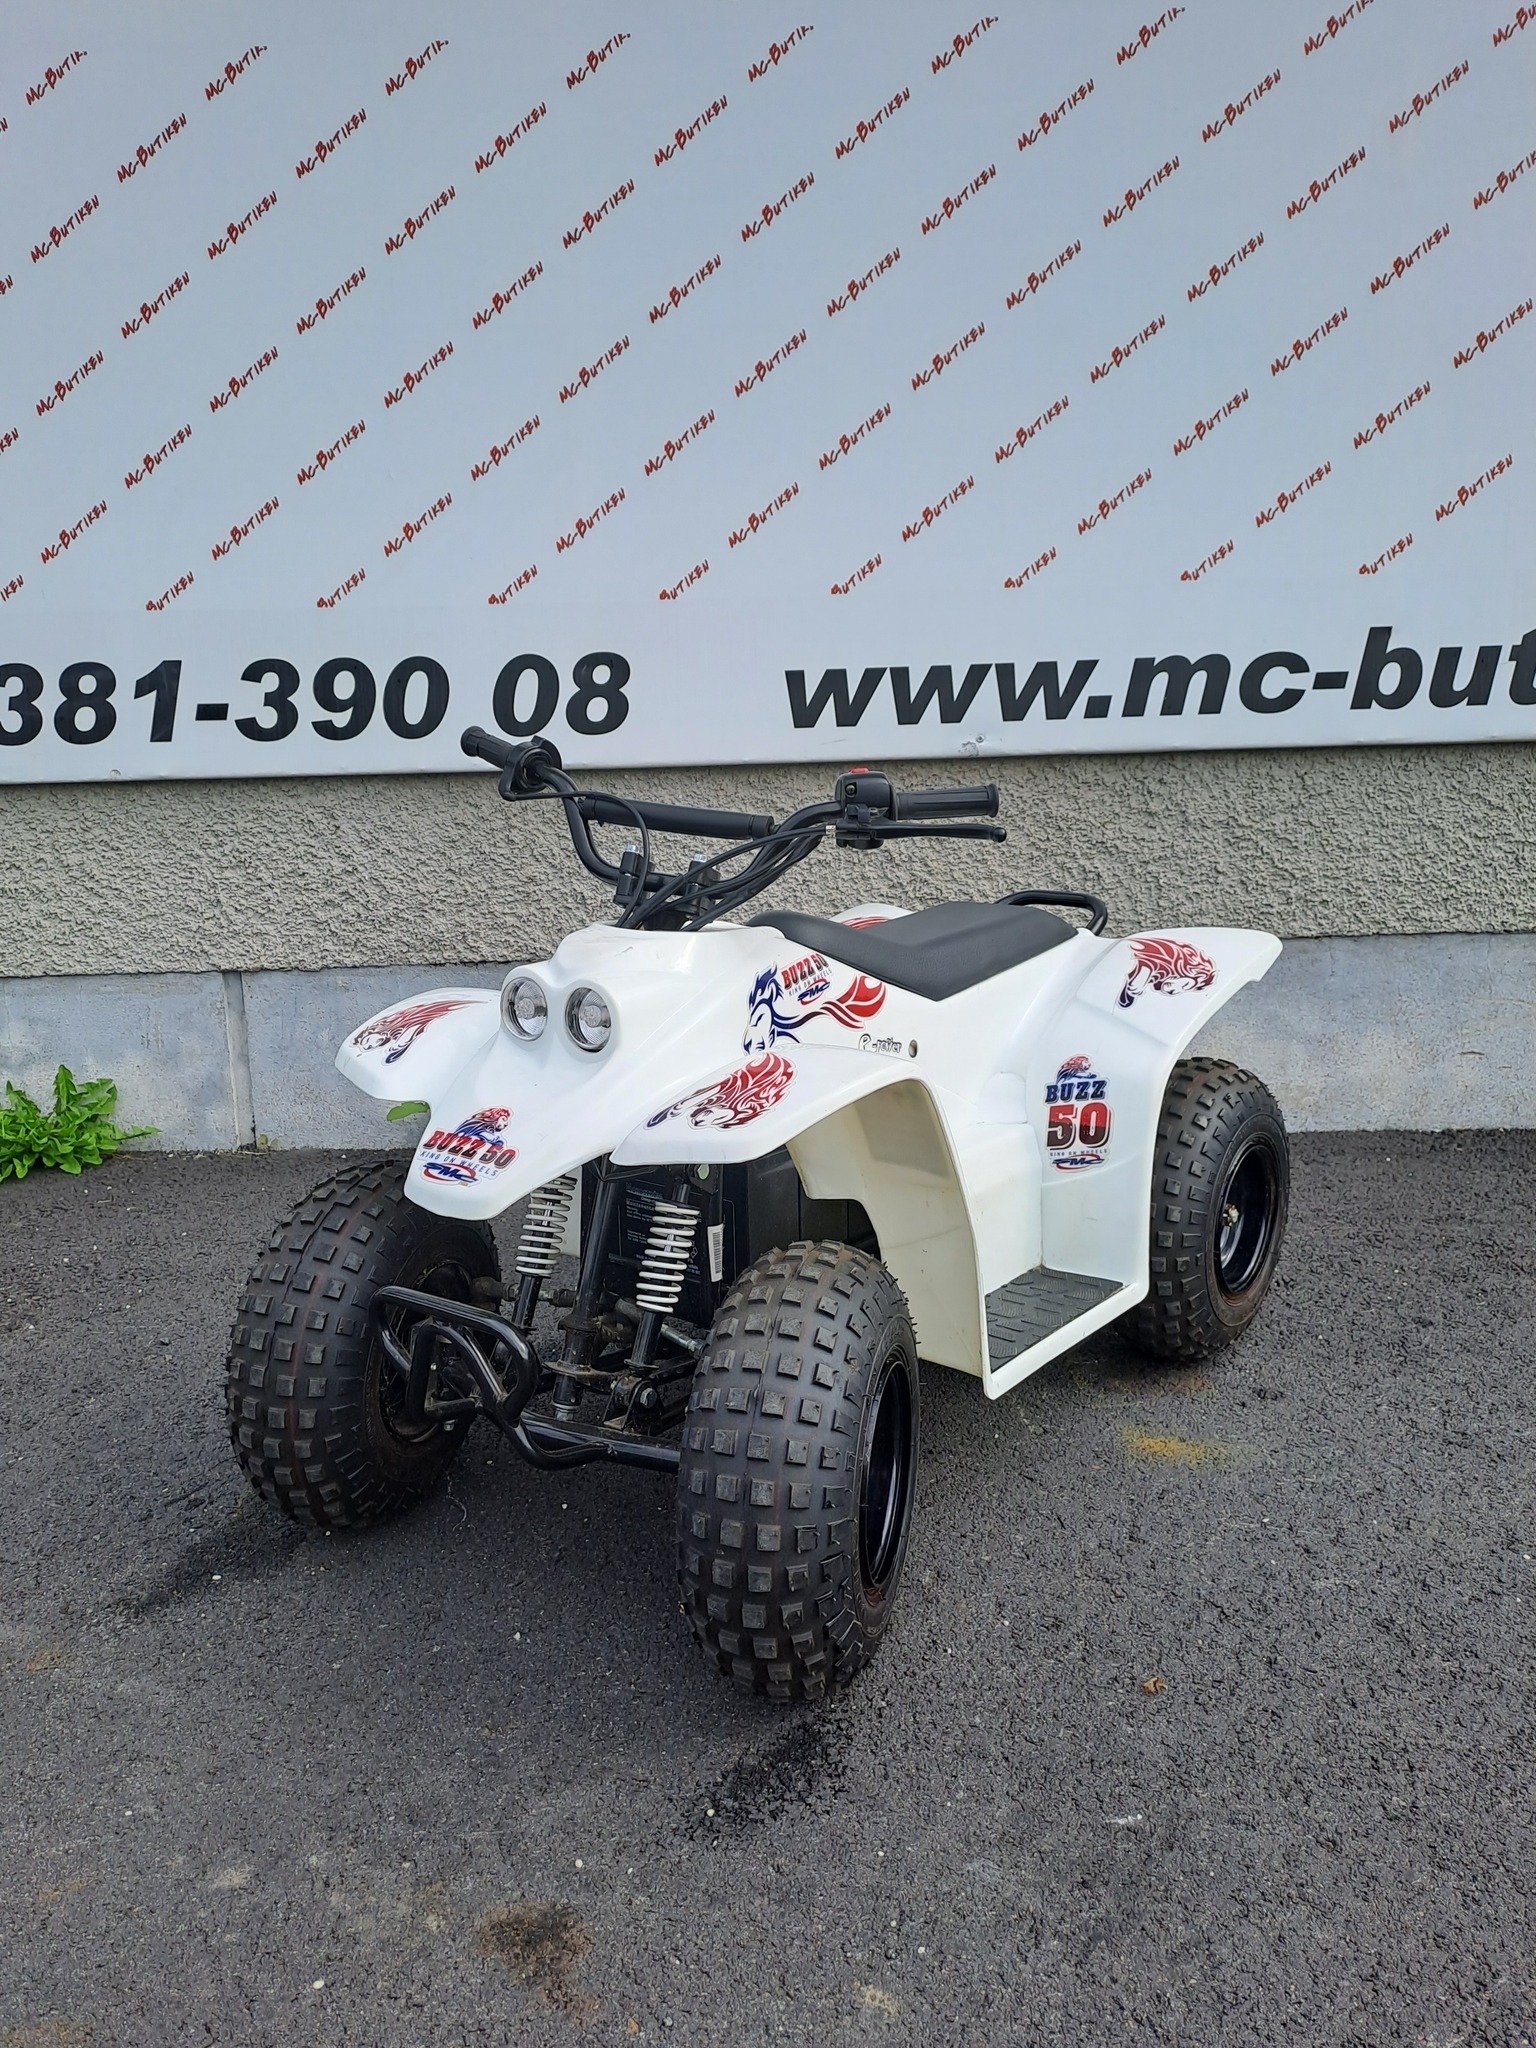 Barnfyrhjuling SMC buzz 50 el